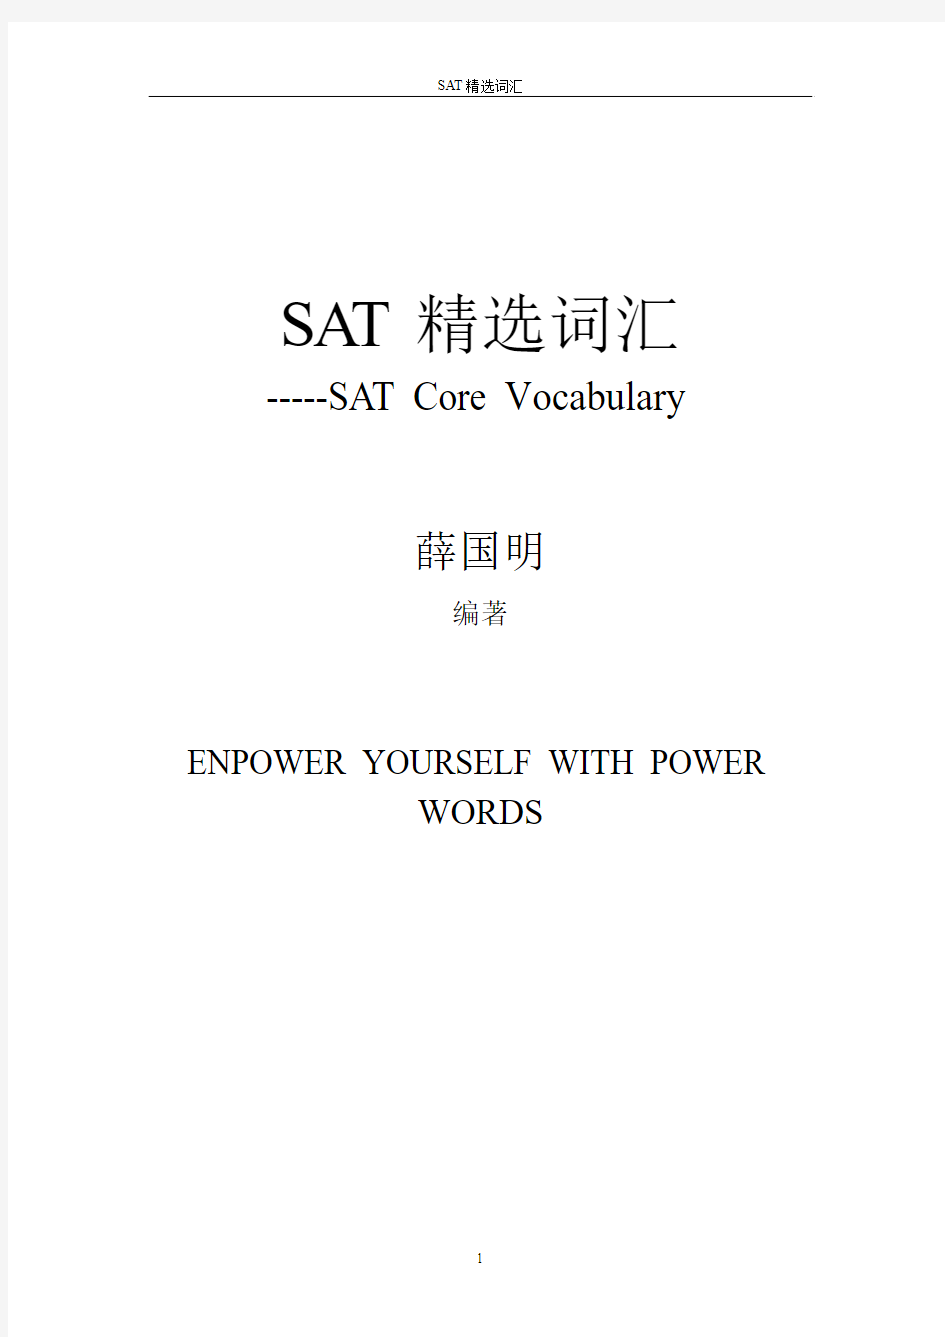 SAT_Core_Vocabulary_1000